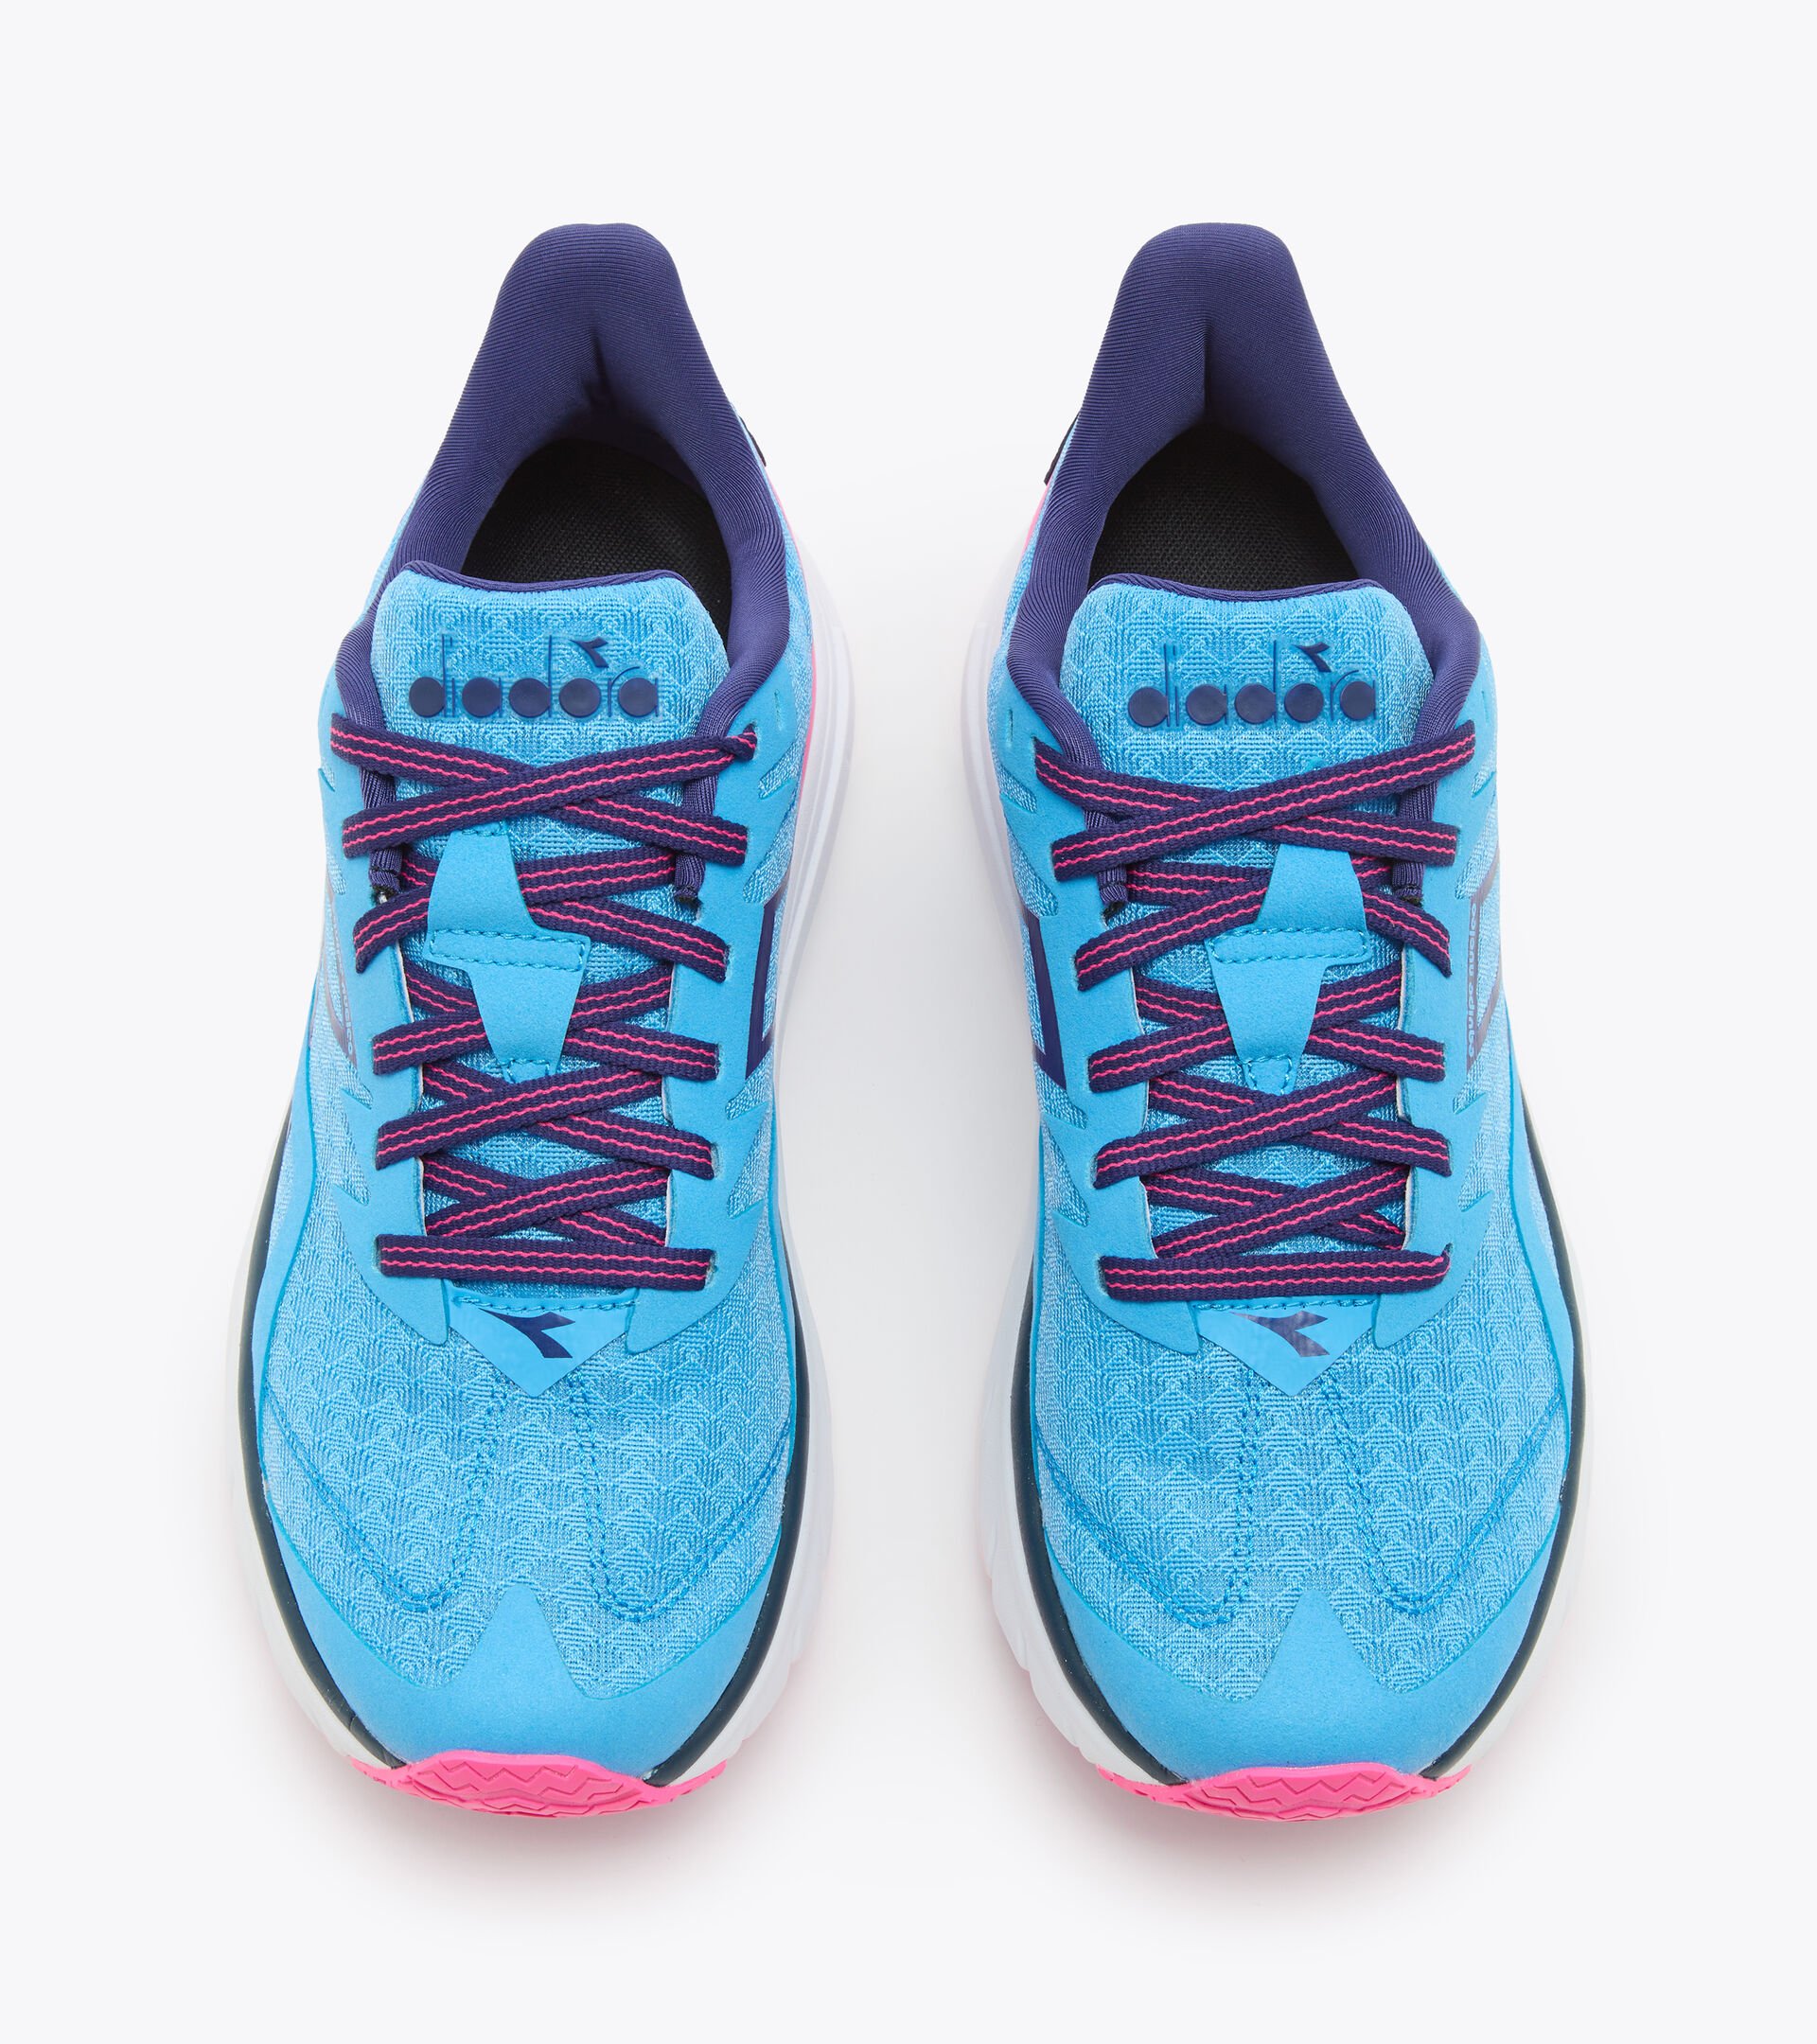 Running shoes - Women EQUIPE NUCLEO W BONNIE BLUE/PINK FLUO - Diadora